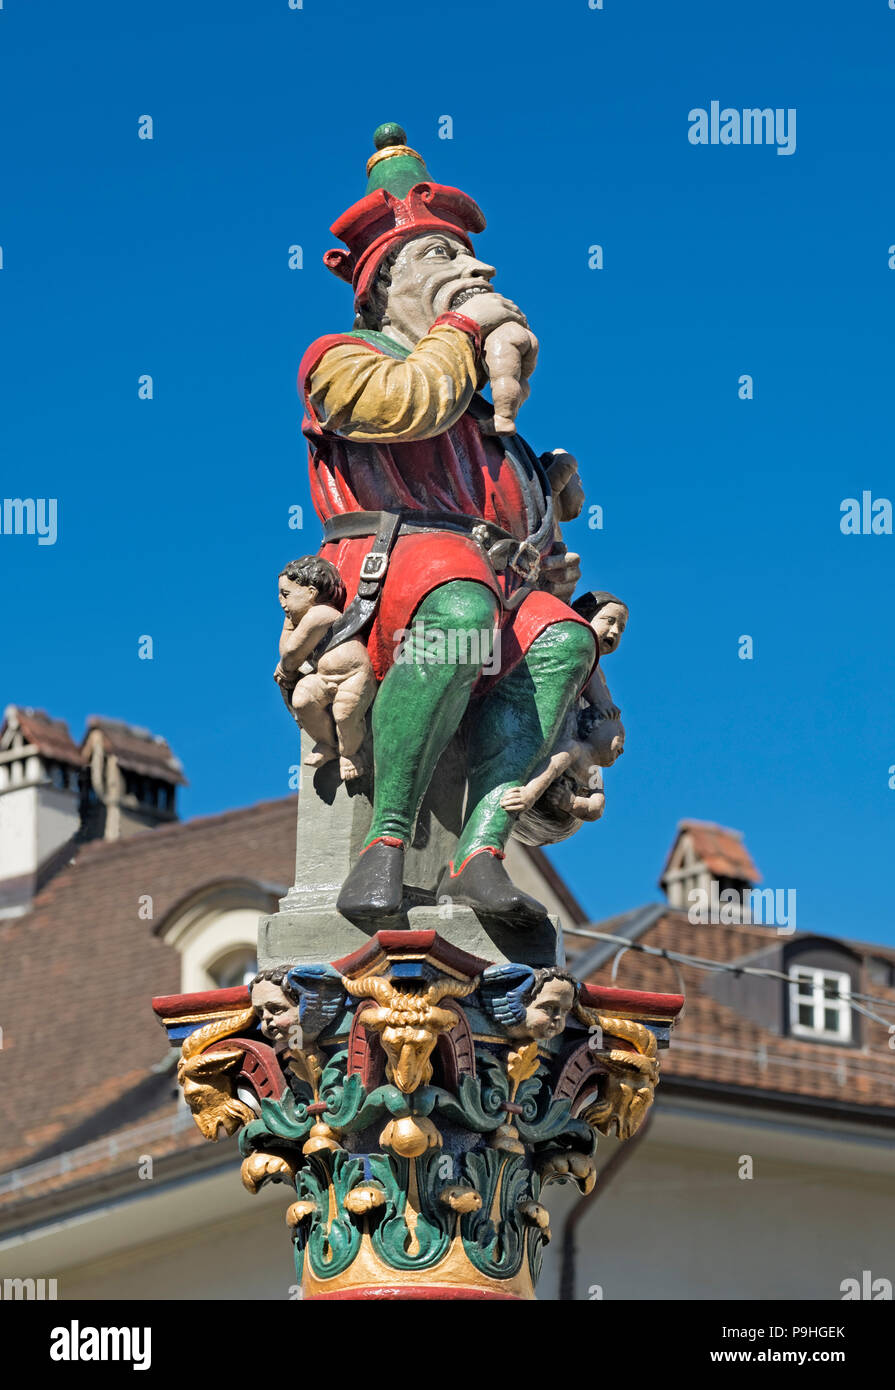 Kindlifresserbrunnen Kind Esser Springbrunnen Statue Altstadt Bern Schweiz Stockfoto